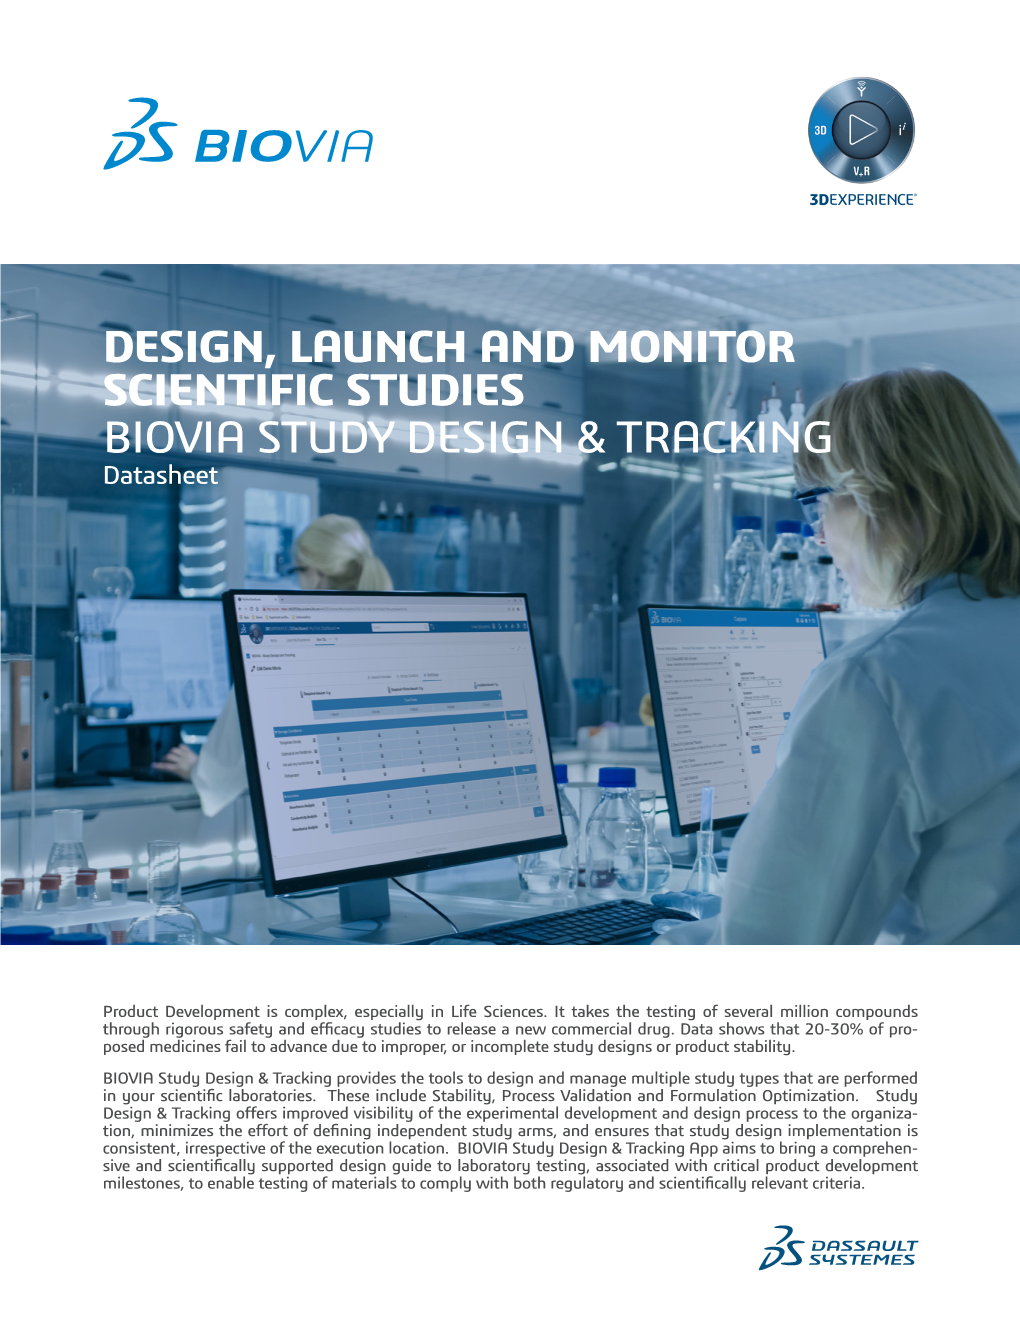 Biovia Study Design & Tracking Design, Launch and Monitor